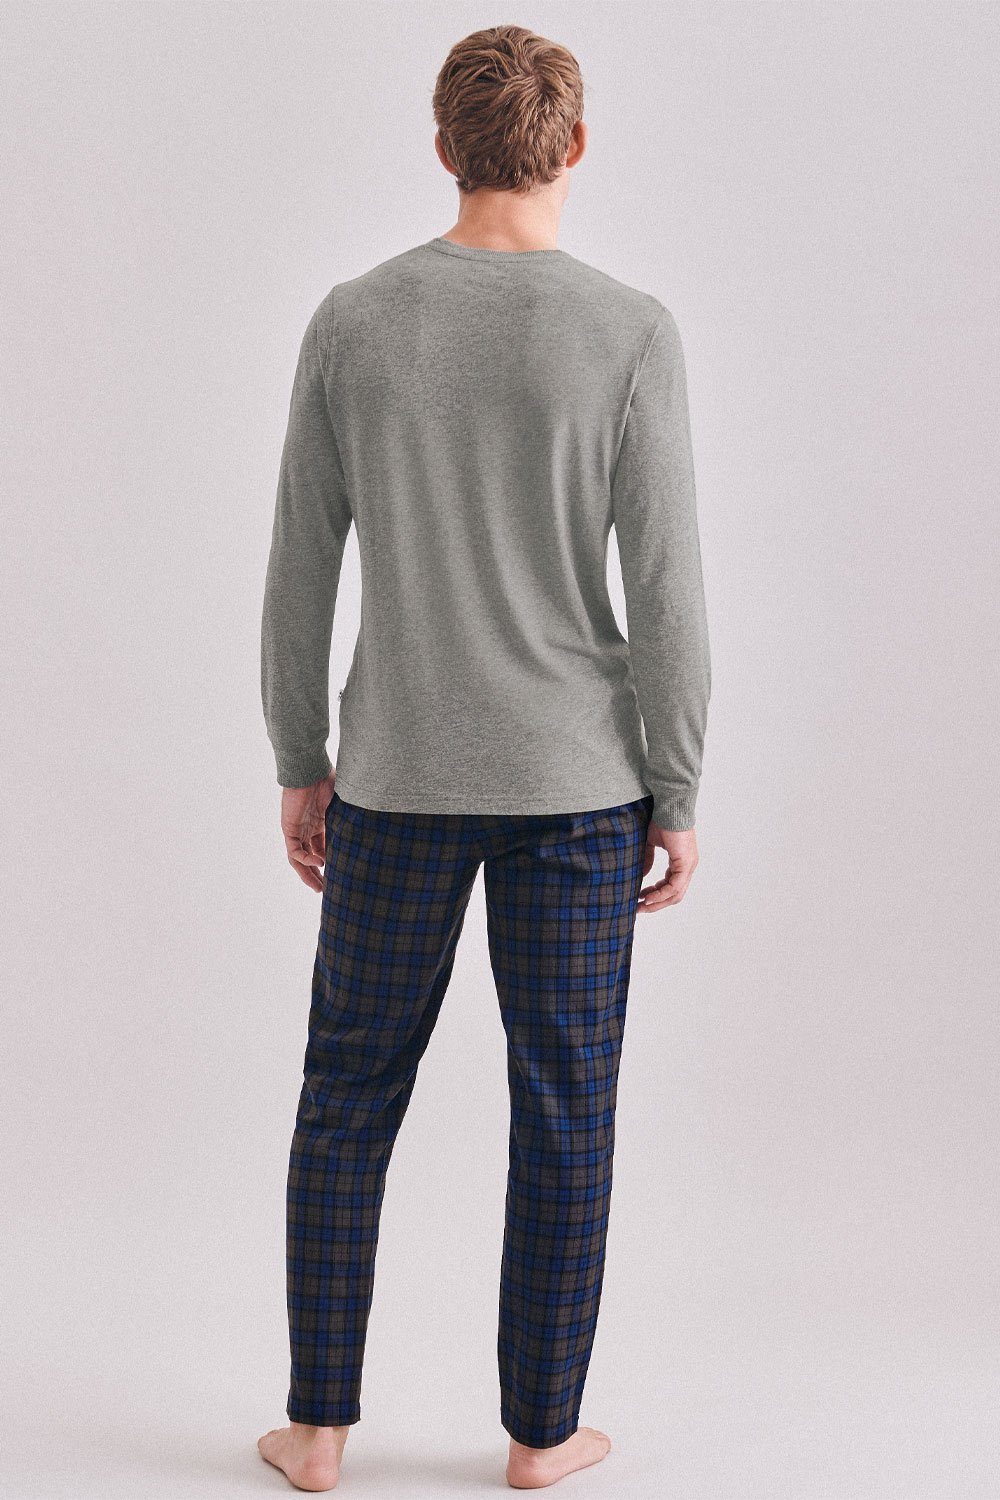 & Pyjama Mix Pyjama olive grey/navy seidensticker Match check 100006